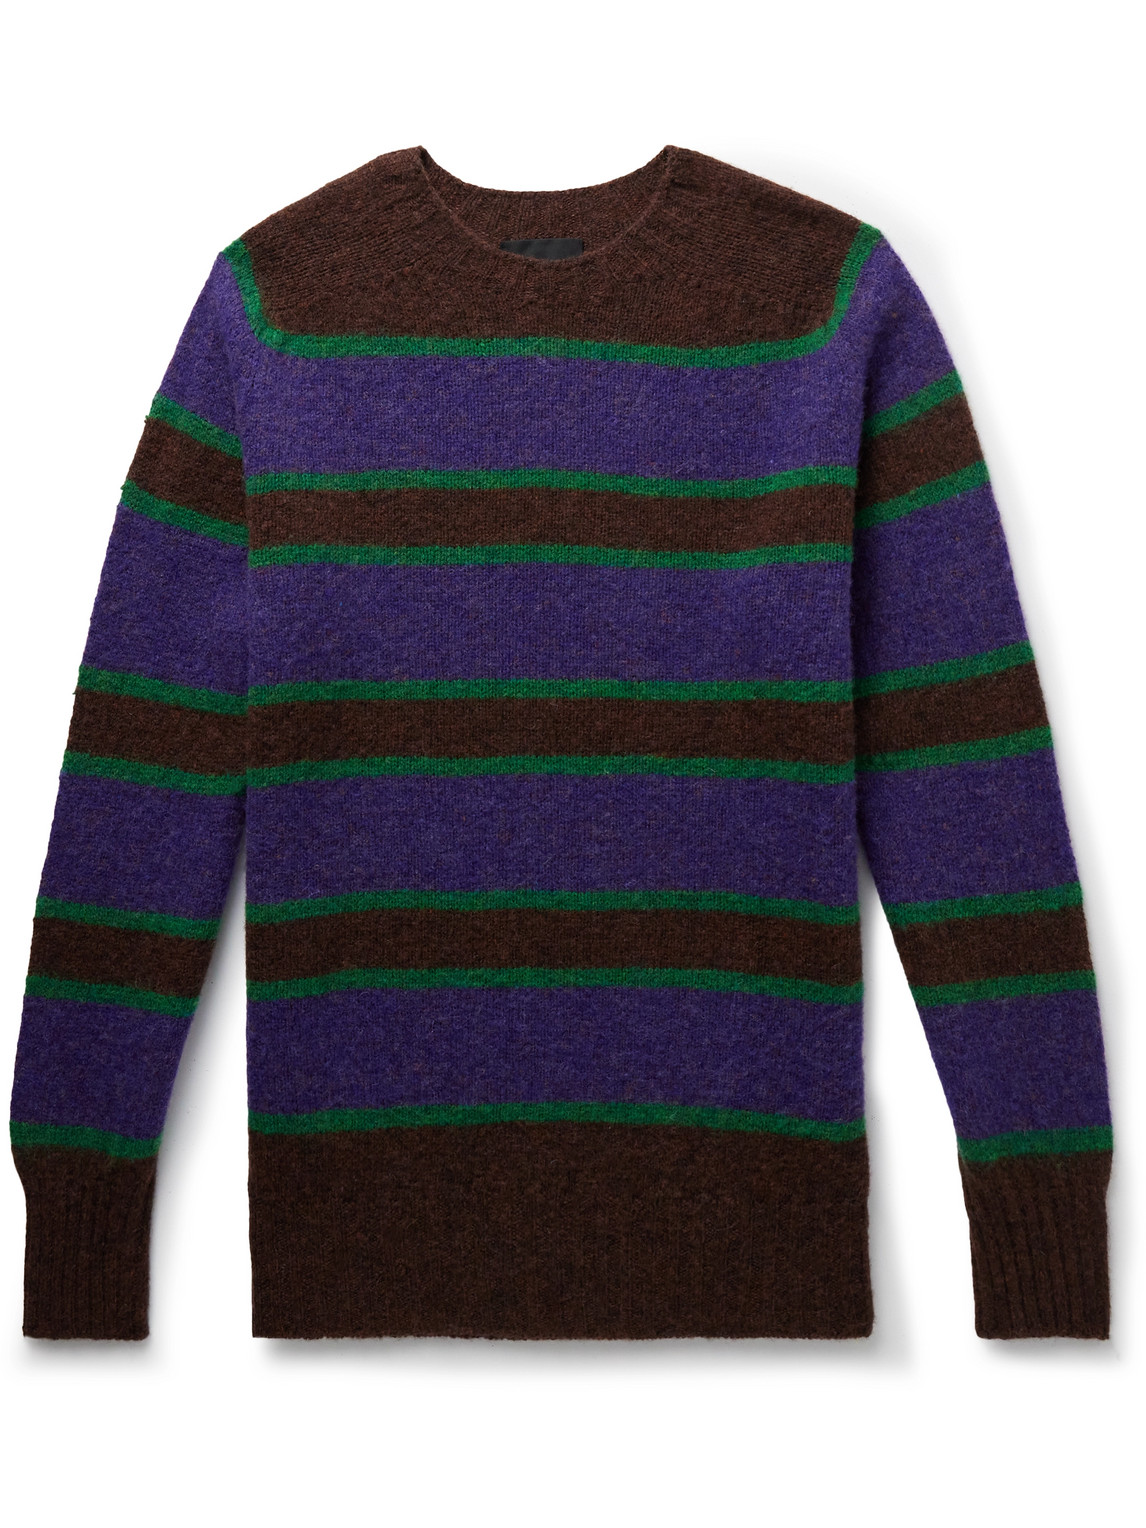 Howlin' Absolute Belter Striped Wool Sweater In Brown